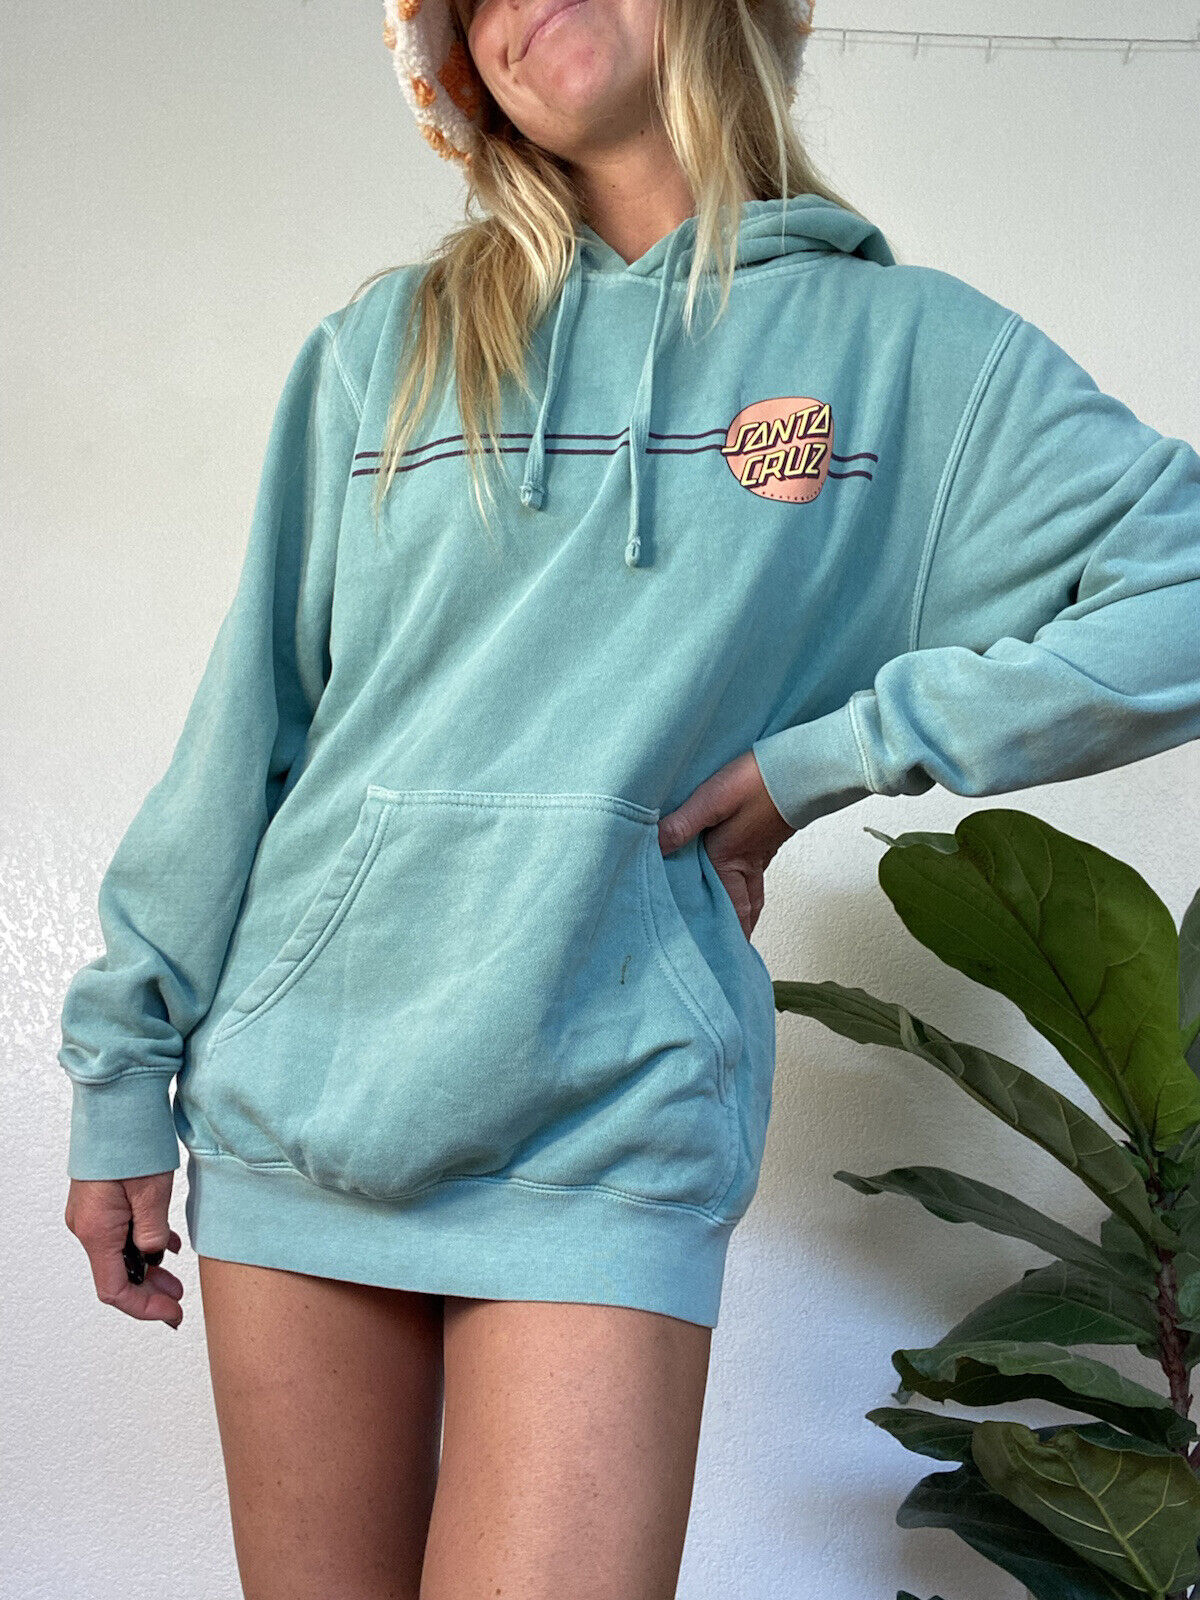 Blue Santa Cruz Sweatshirt - Independent - Adult Small